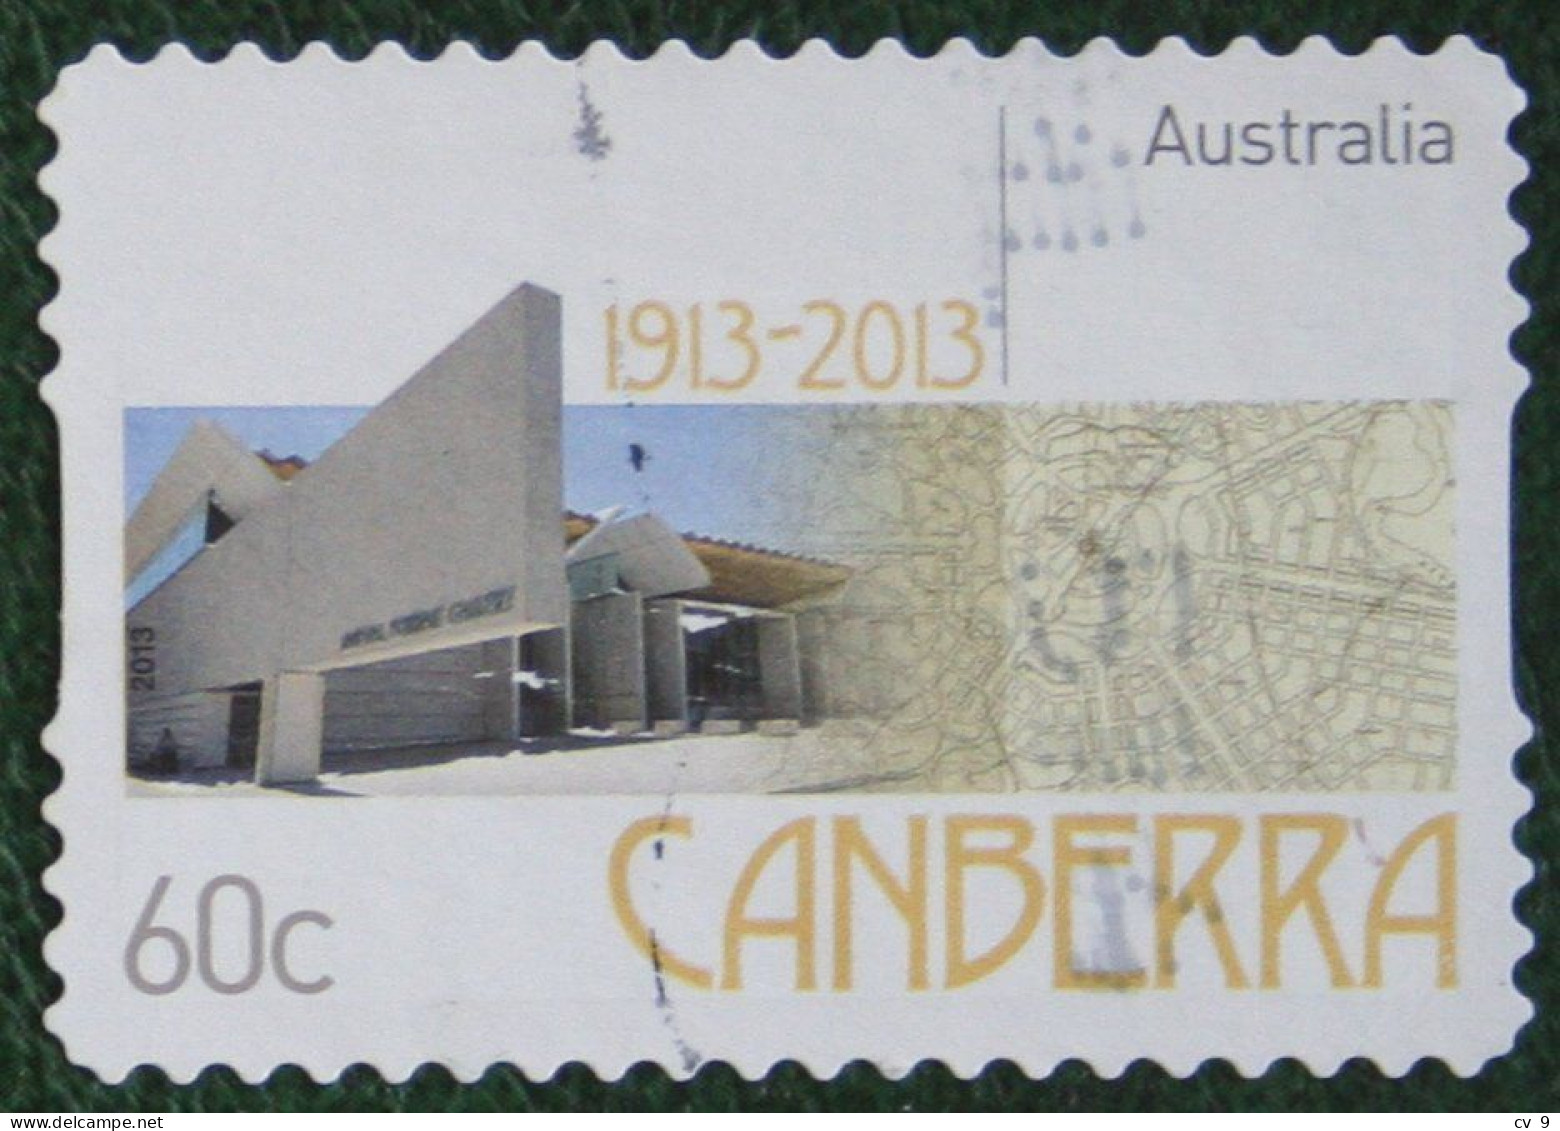 National Portrait Gallery, Canberra Self Adhesive 2013 Mi 3911 Y&T Used Gebruikt Oblitere Australia Australien Australie - Used Stamps